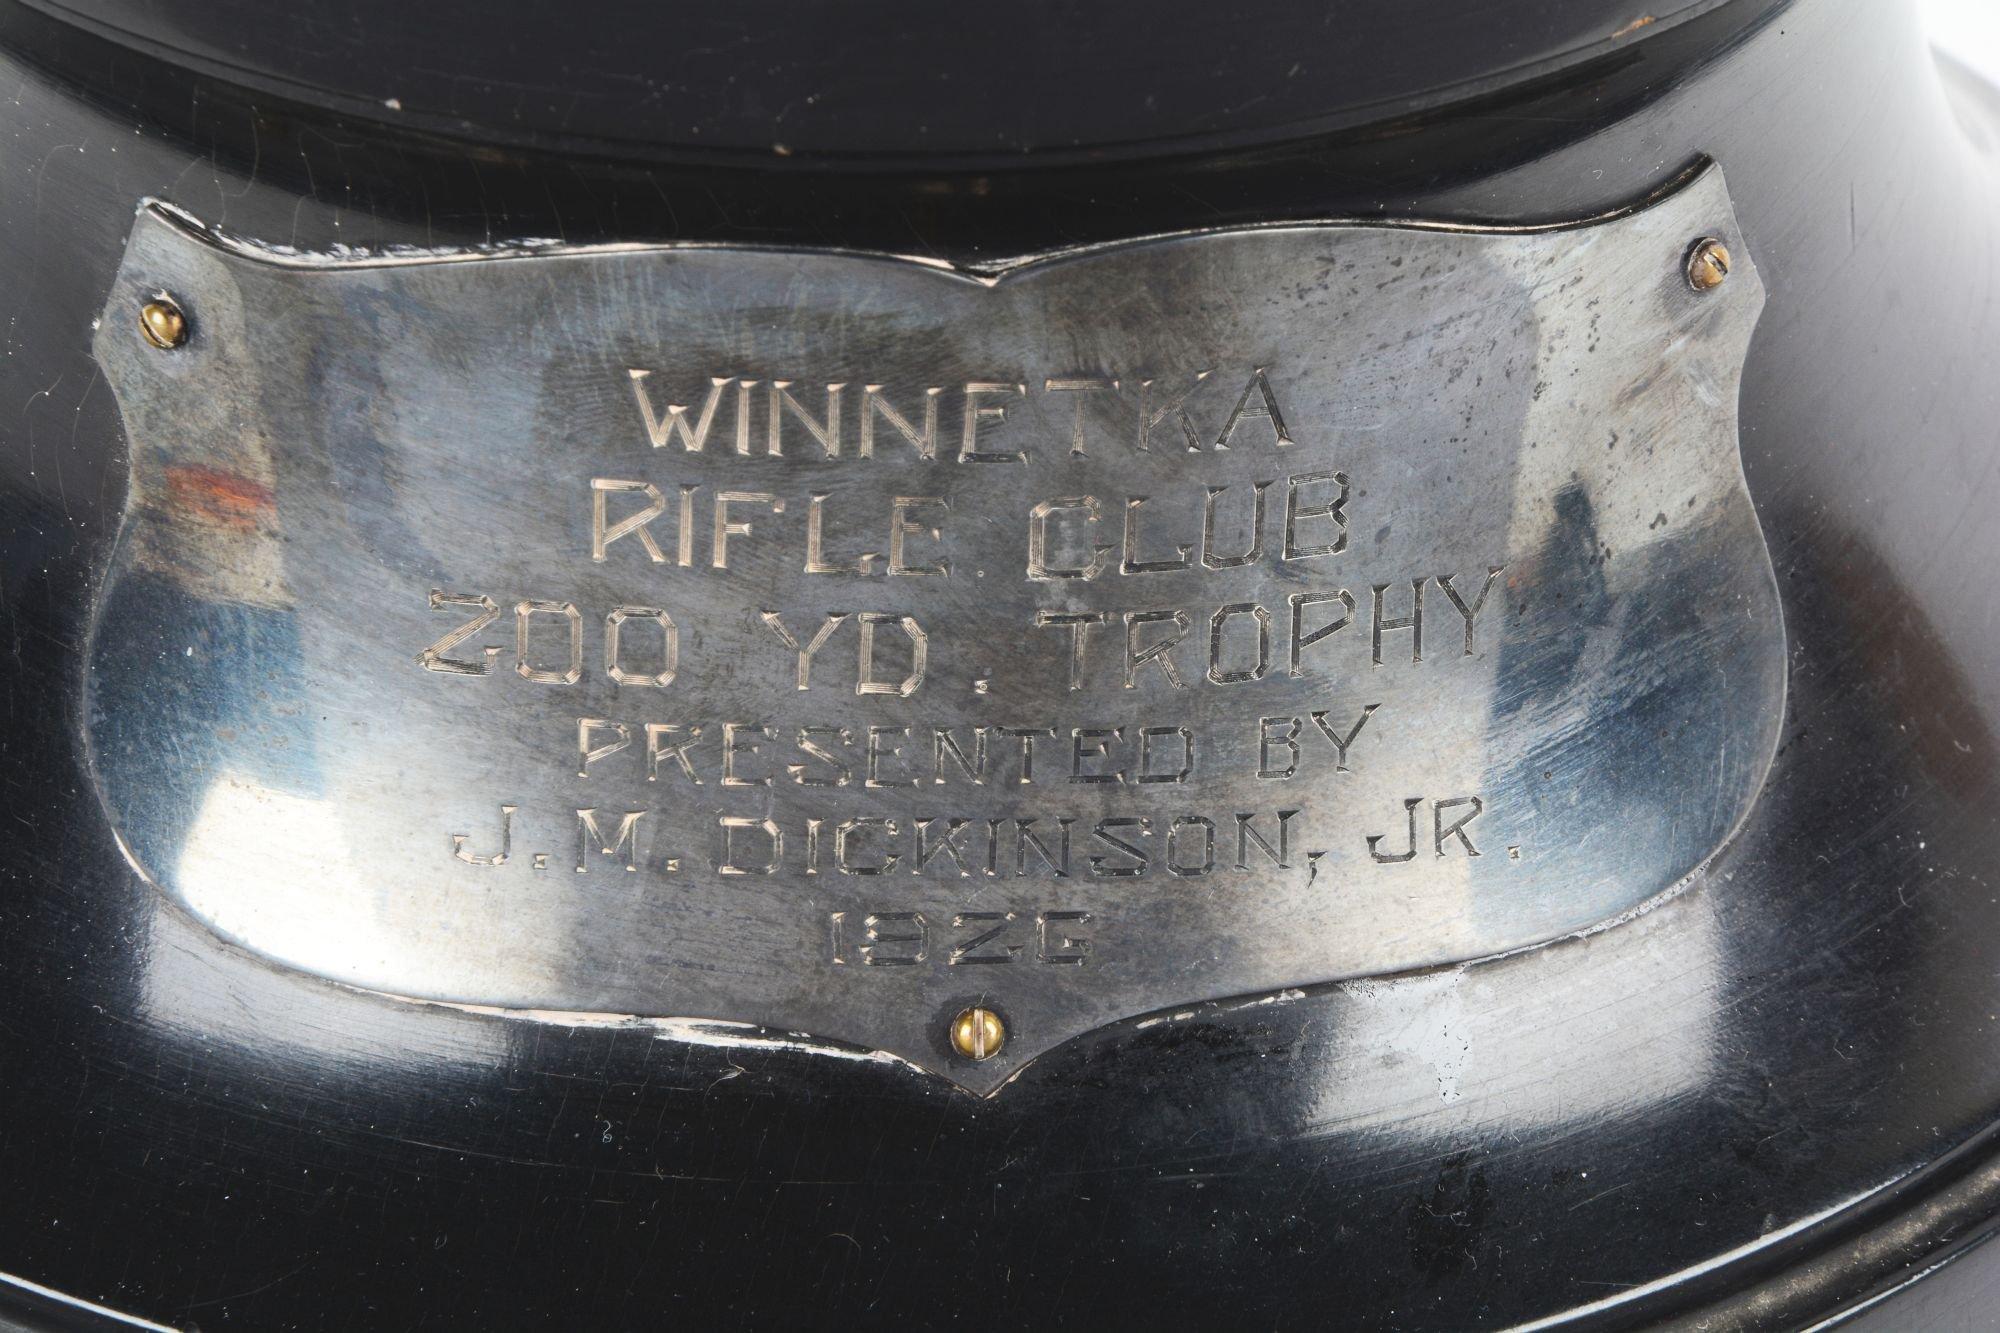 1926-27 Winnetka, Illinois Rifle Club Trophy with Indian & Rifles.